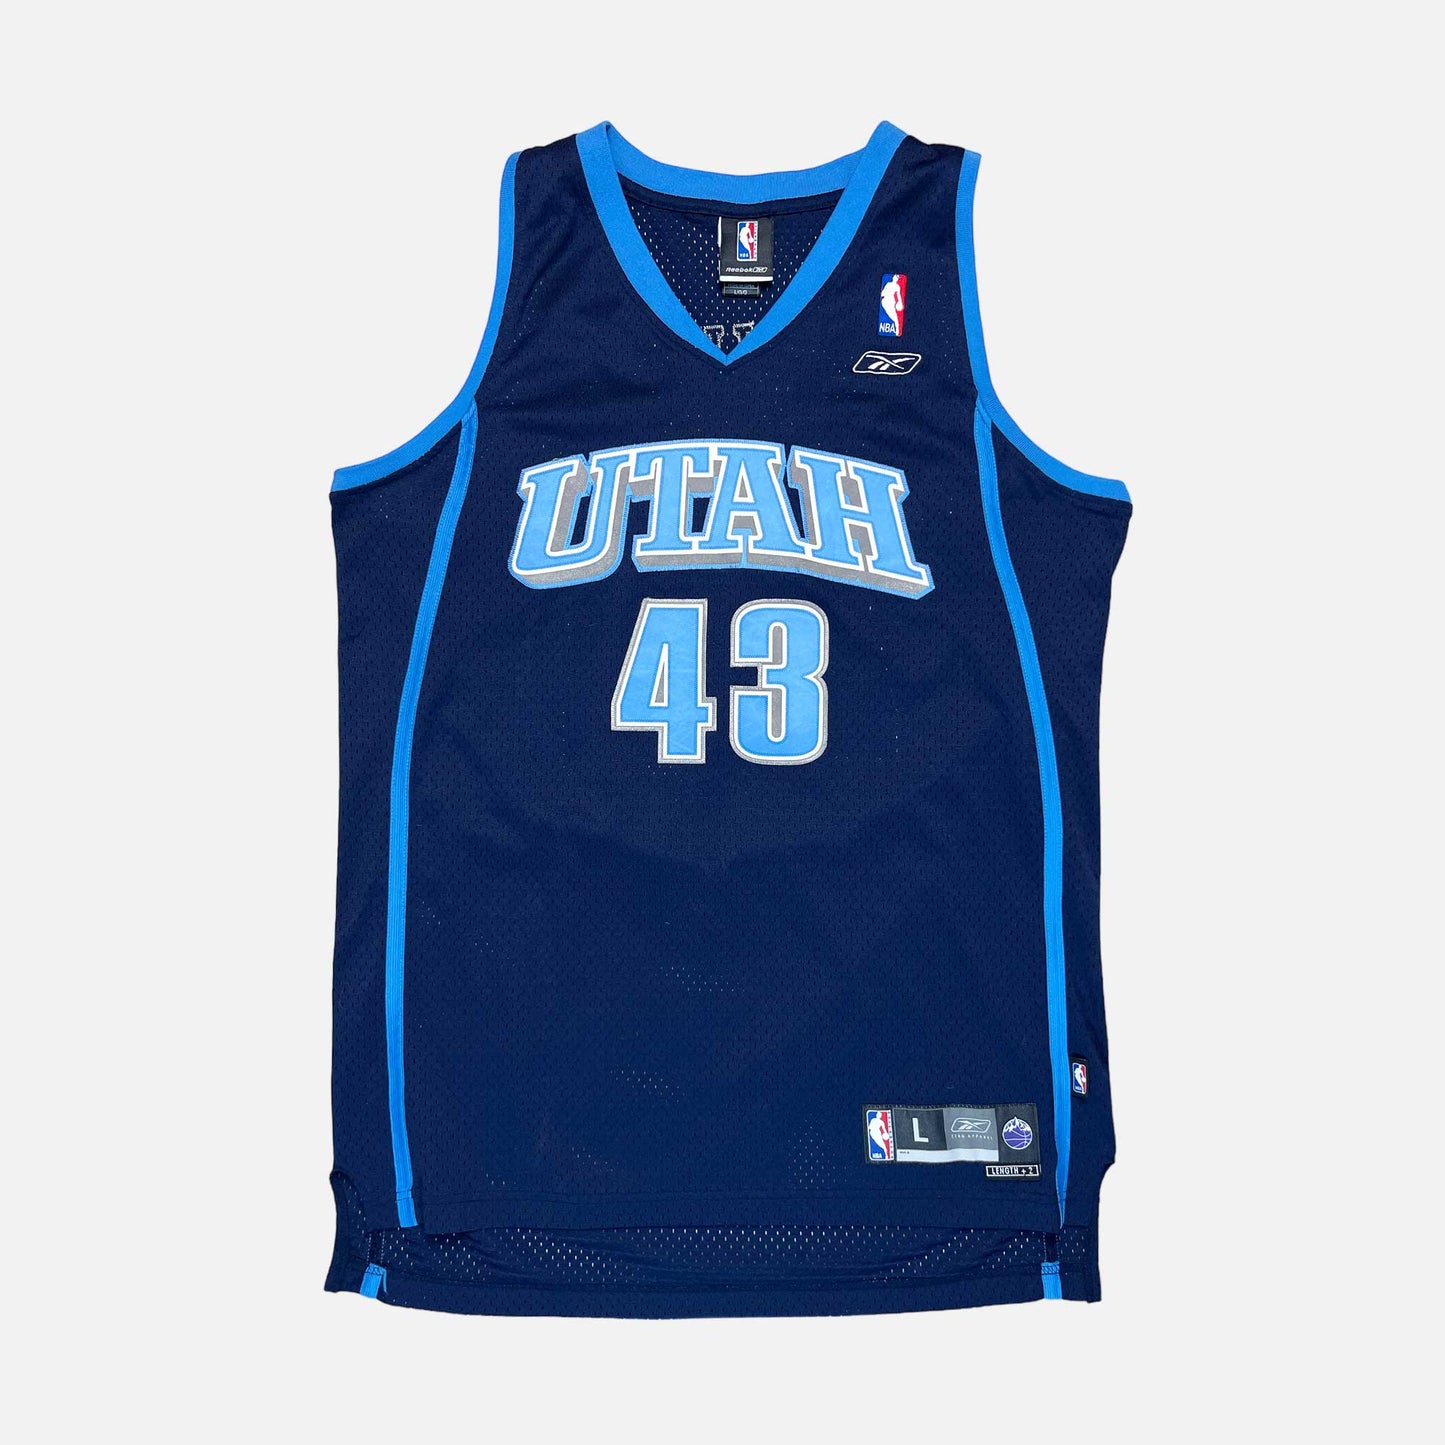 Utah Jazz - Kris Humphries - Größe L - Reebok - NBA Trikot